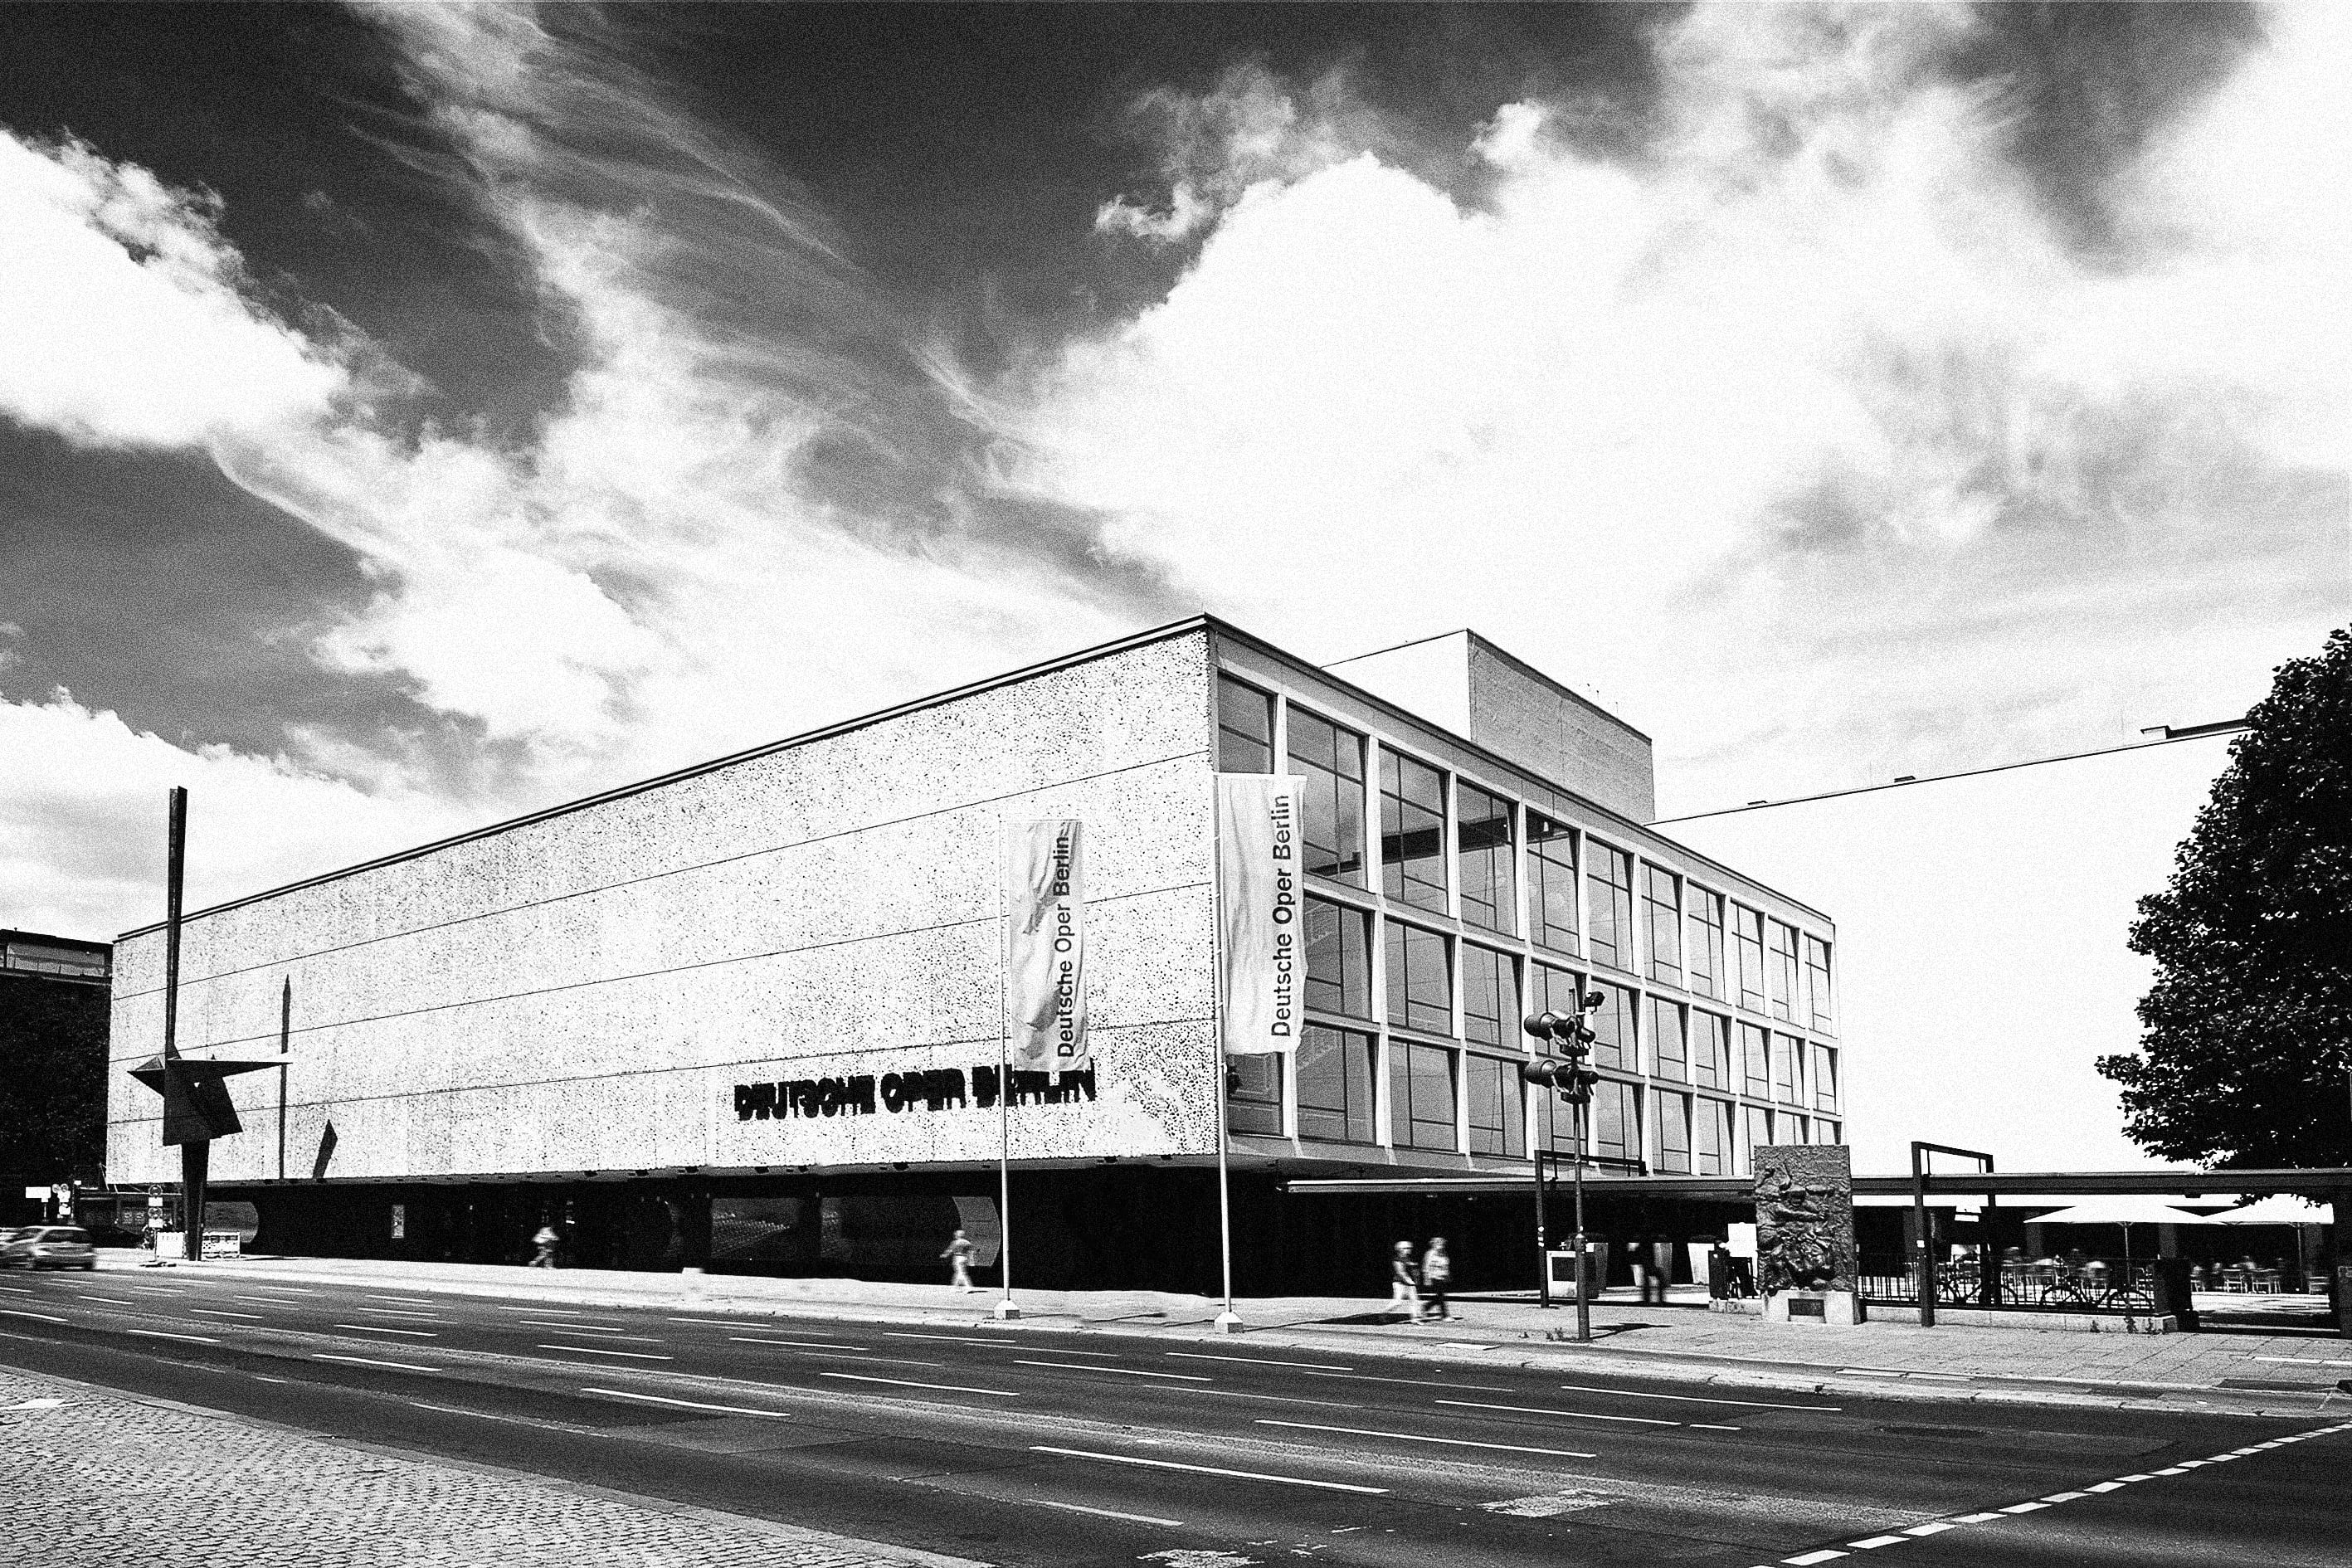 Bureau Johannes Erler – Deutsche Oper Berlin